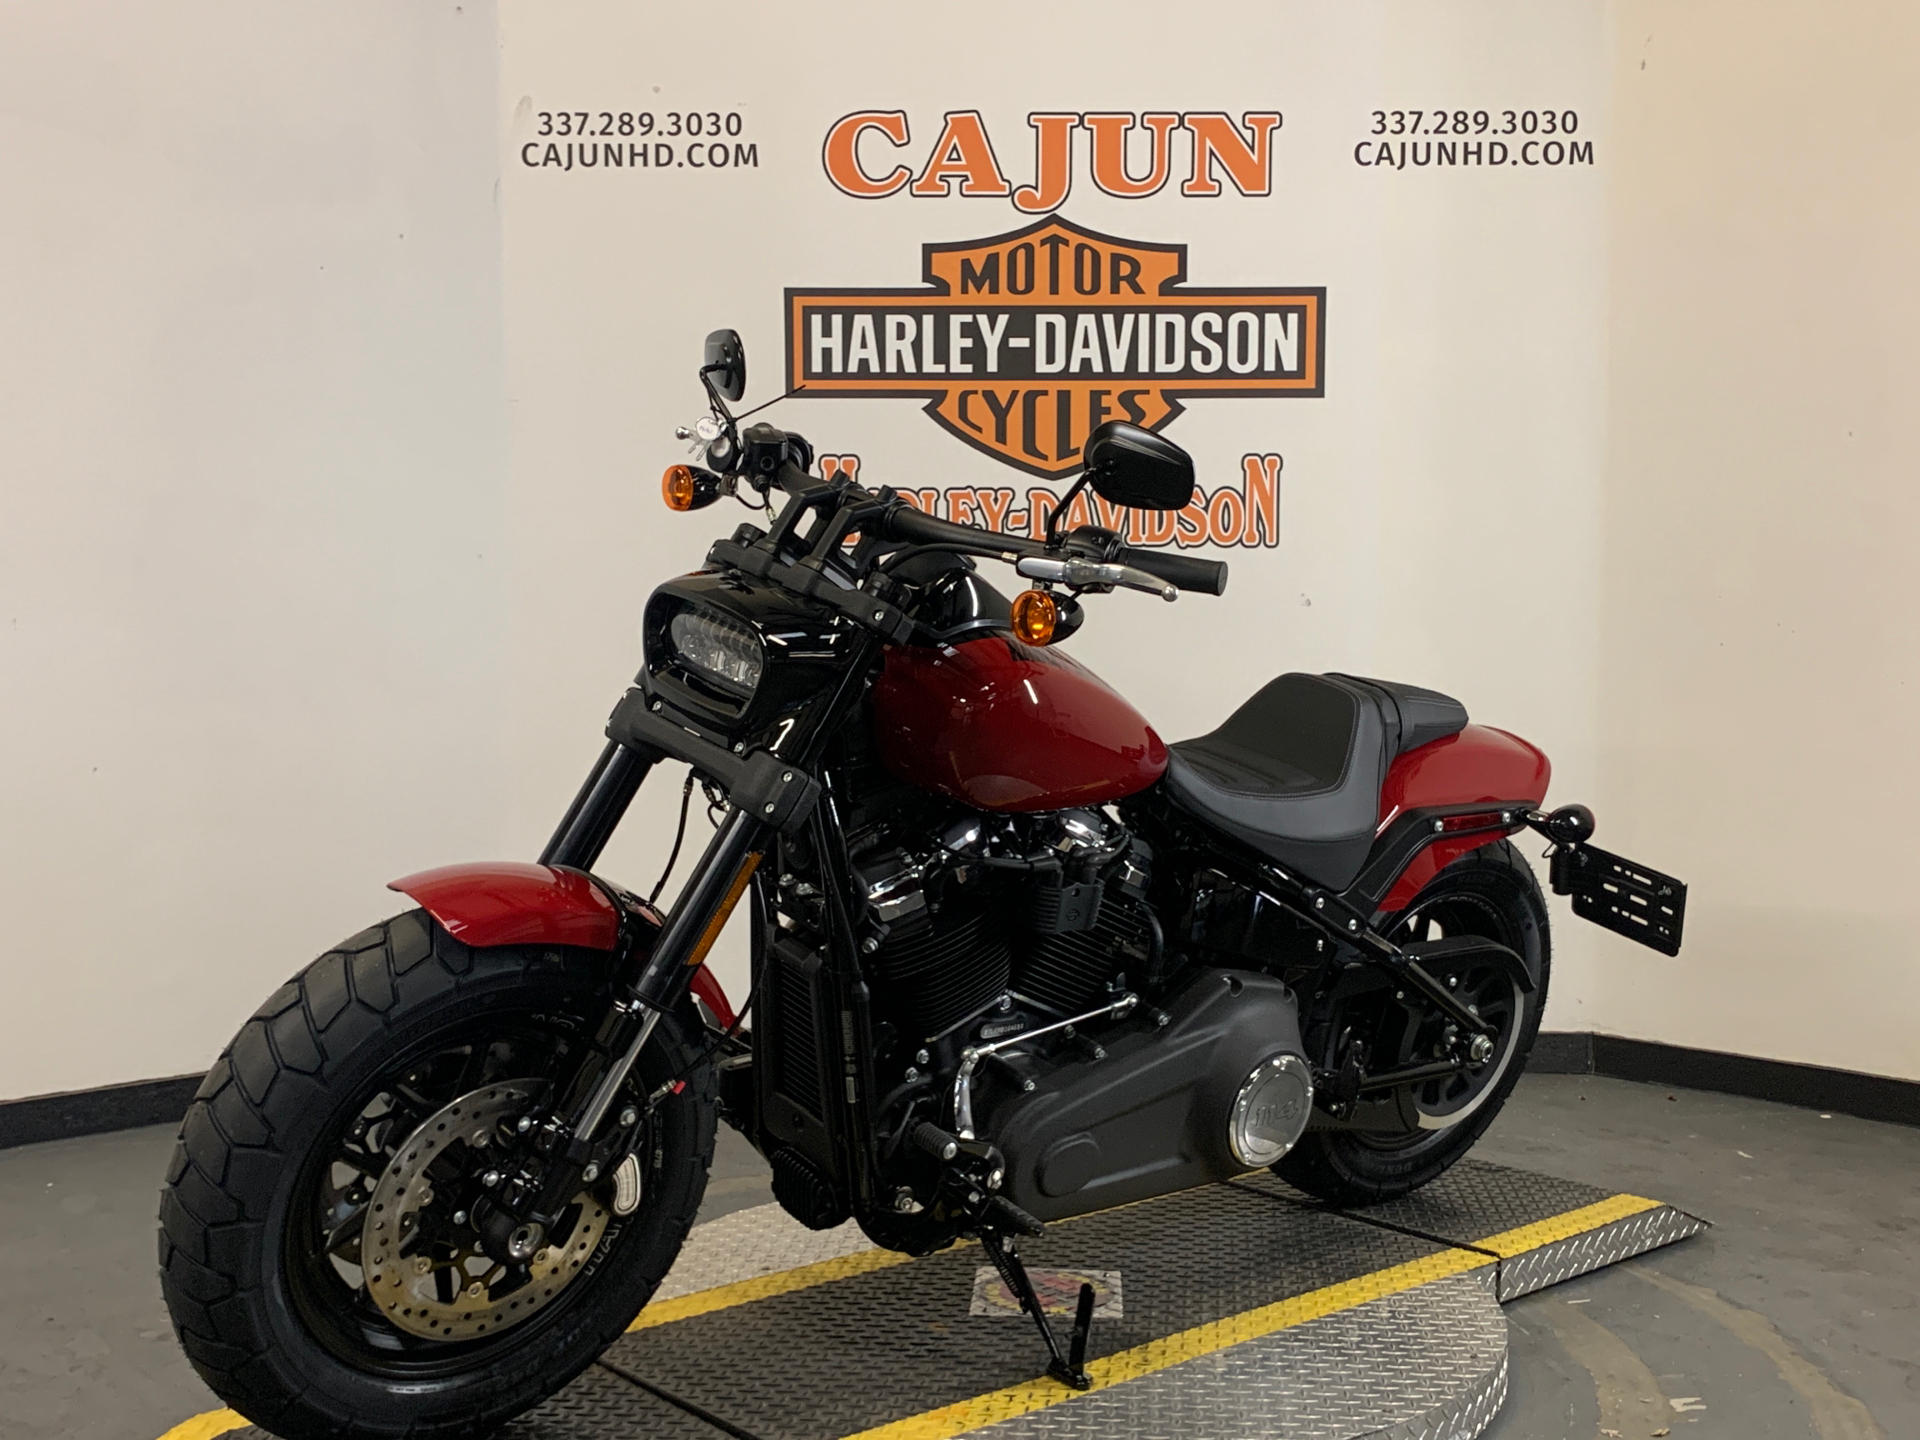 New 2021 Harley Davidson Fat Bob 114 Billiard Red Motorcycles In Scott La 016461